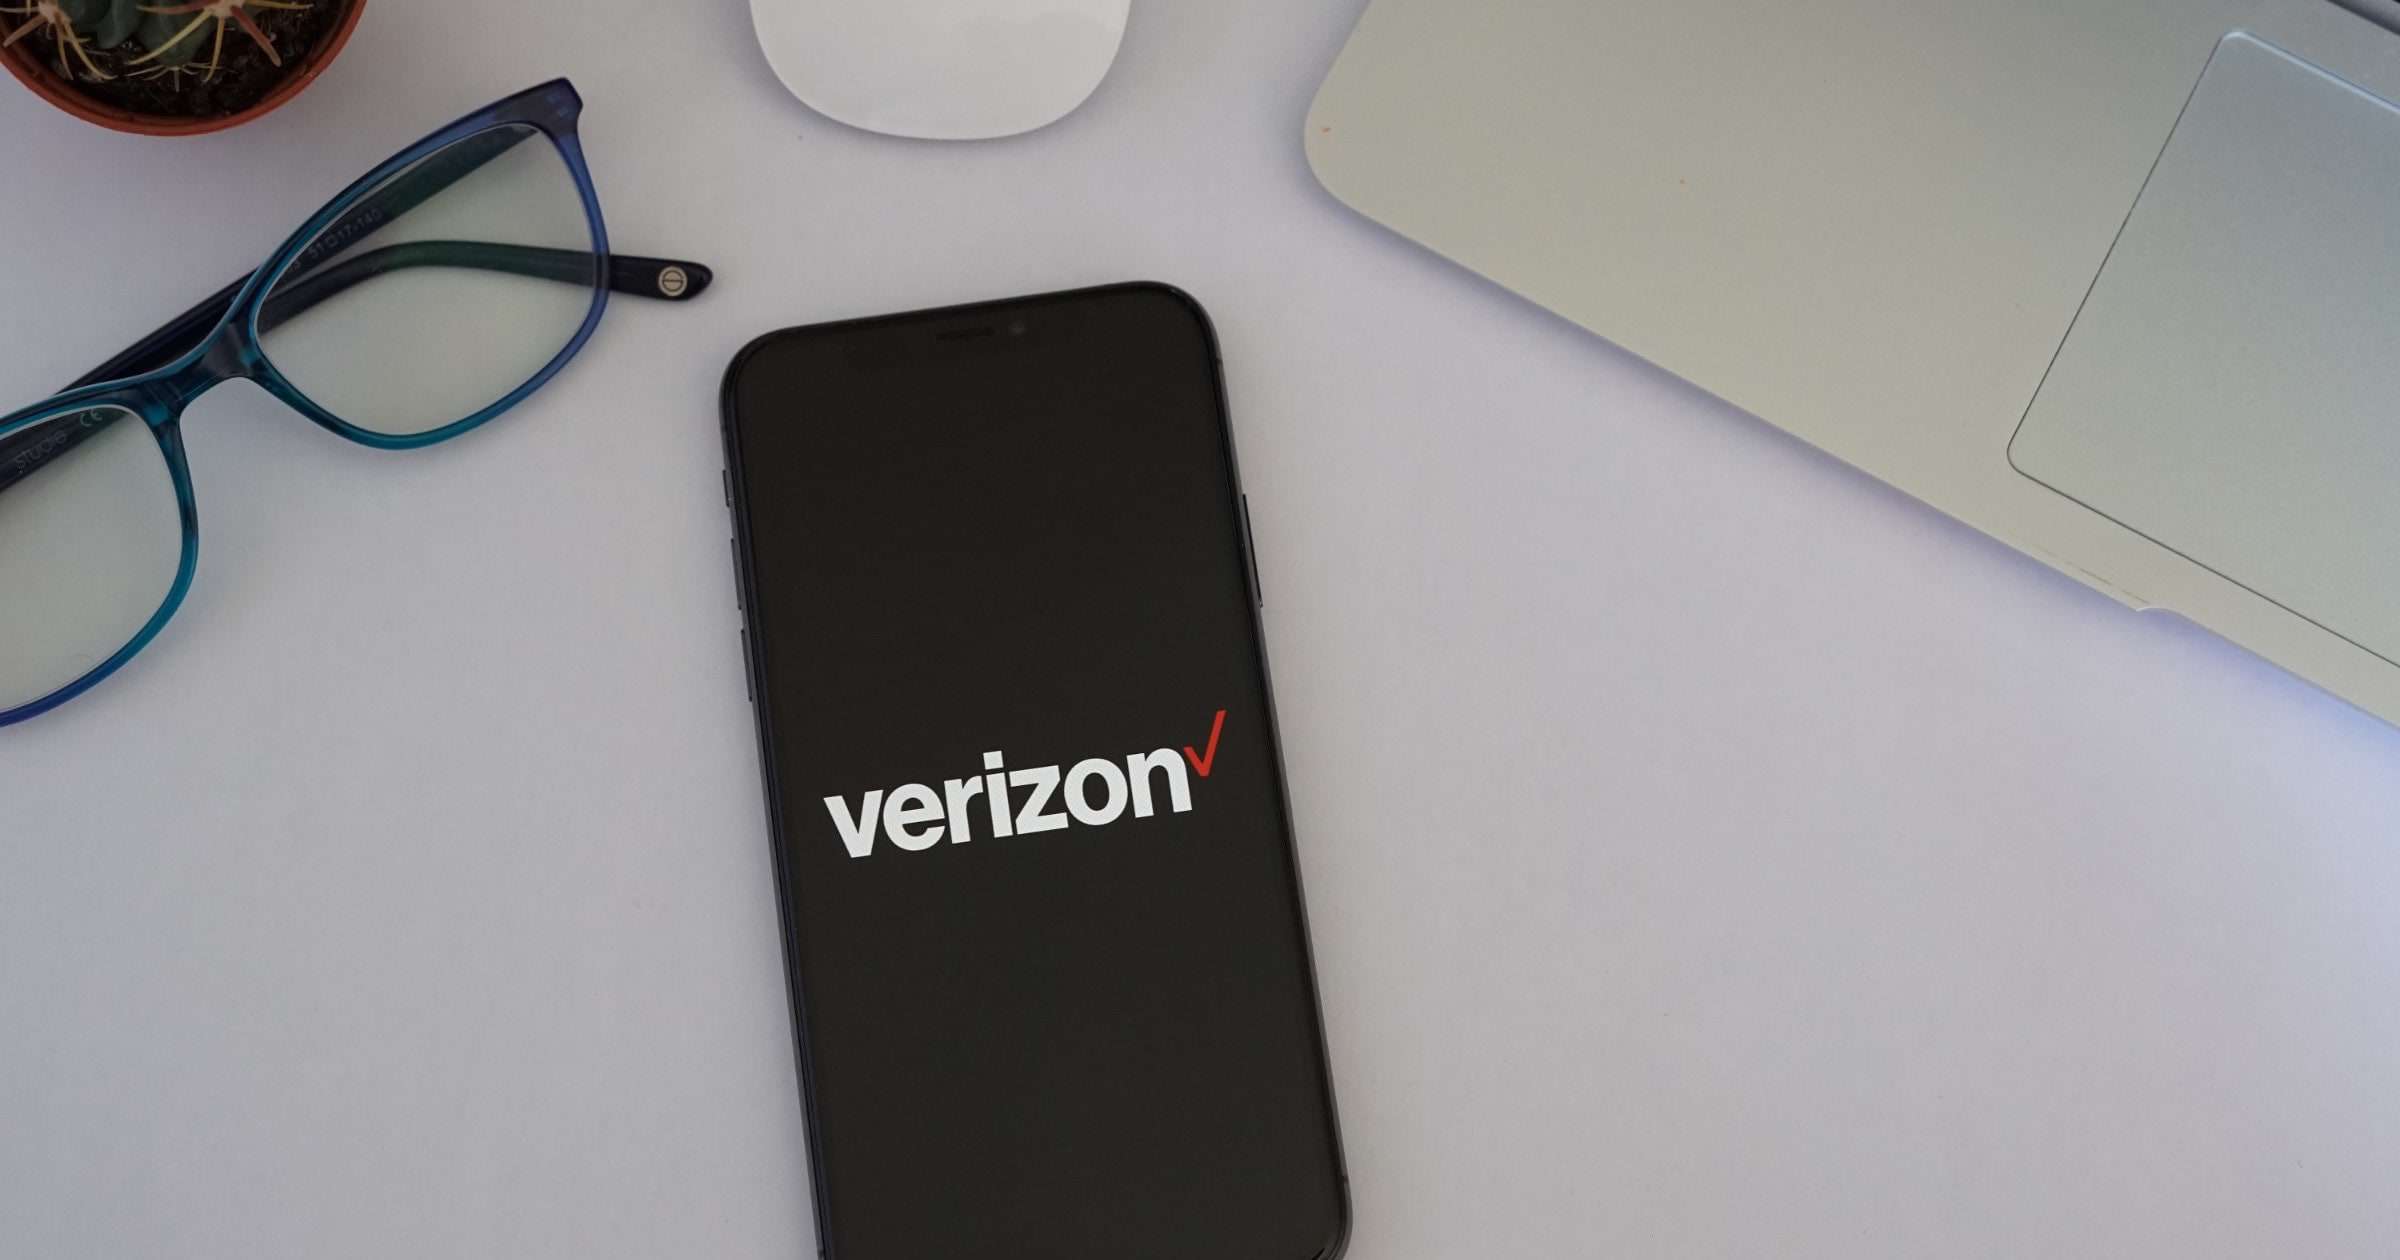 Verizon logo on iPhone